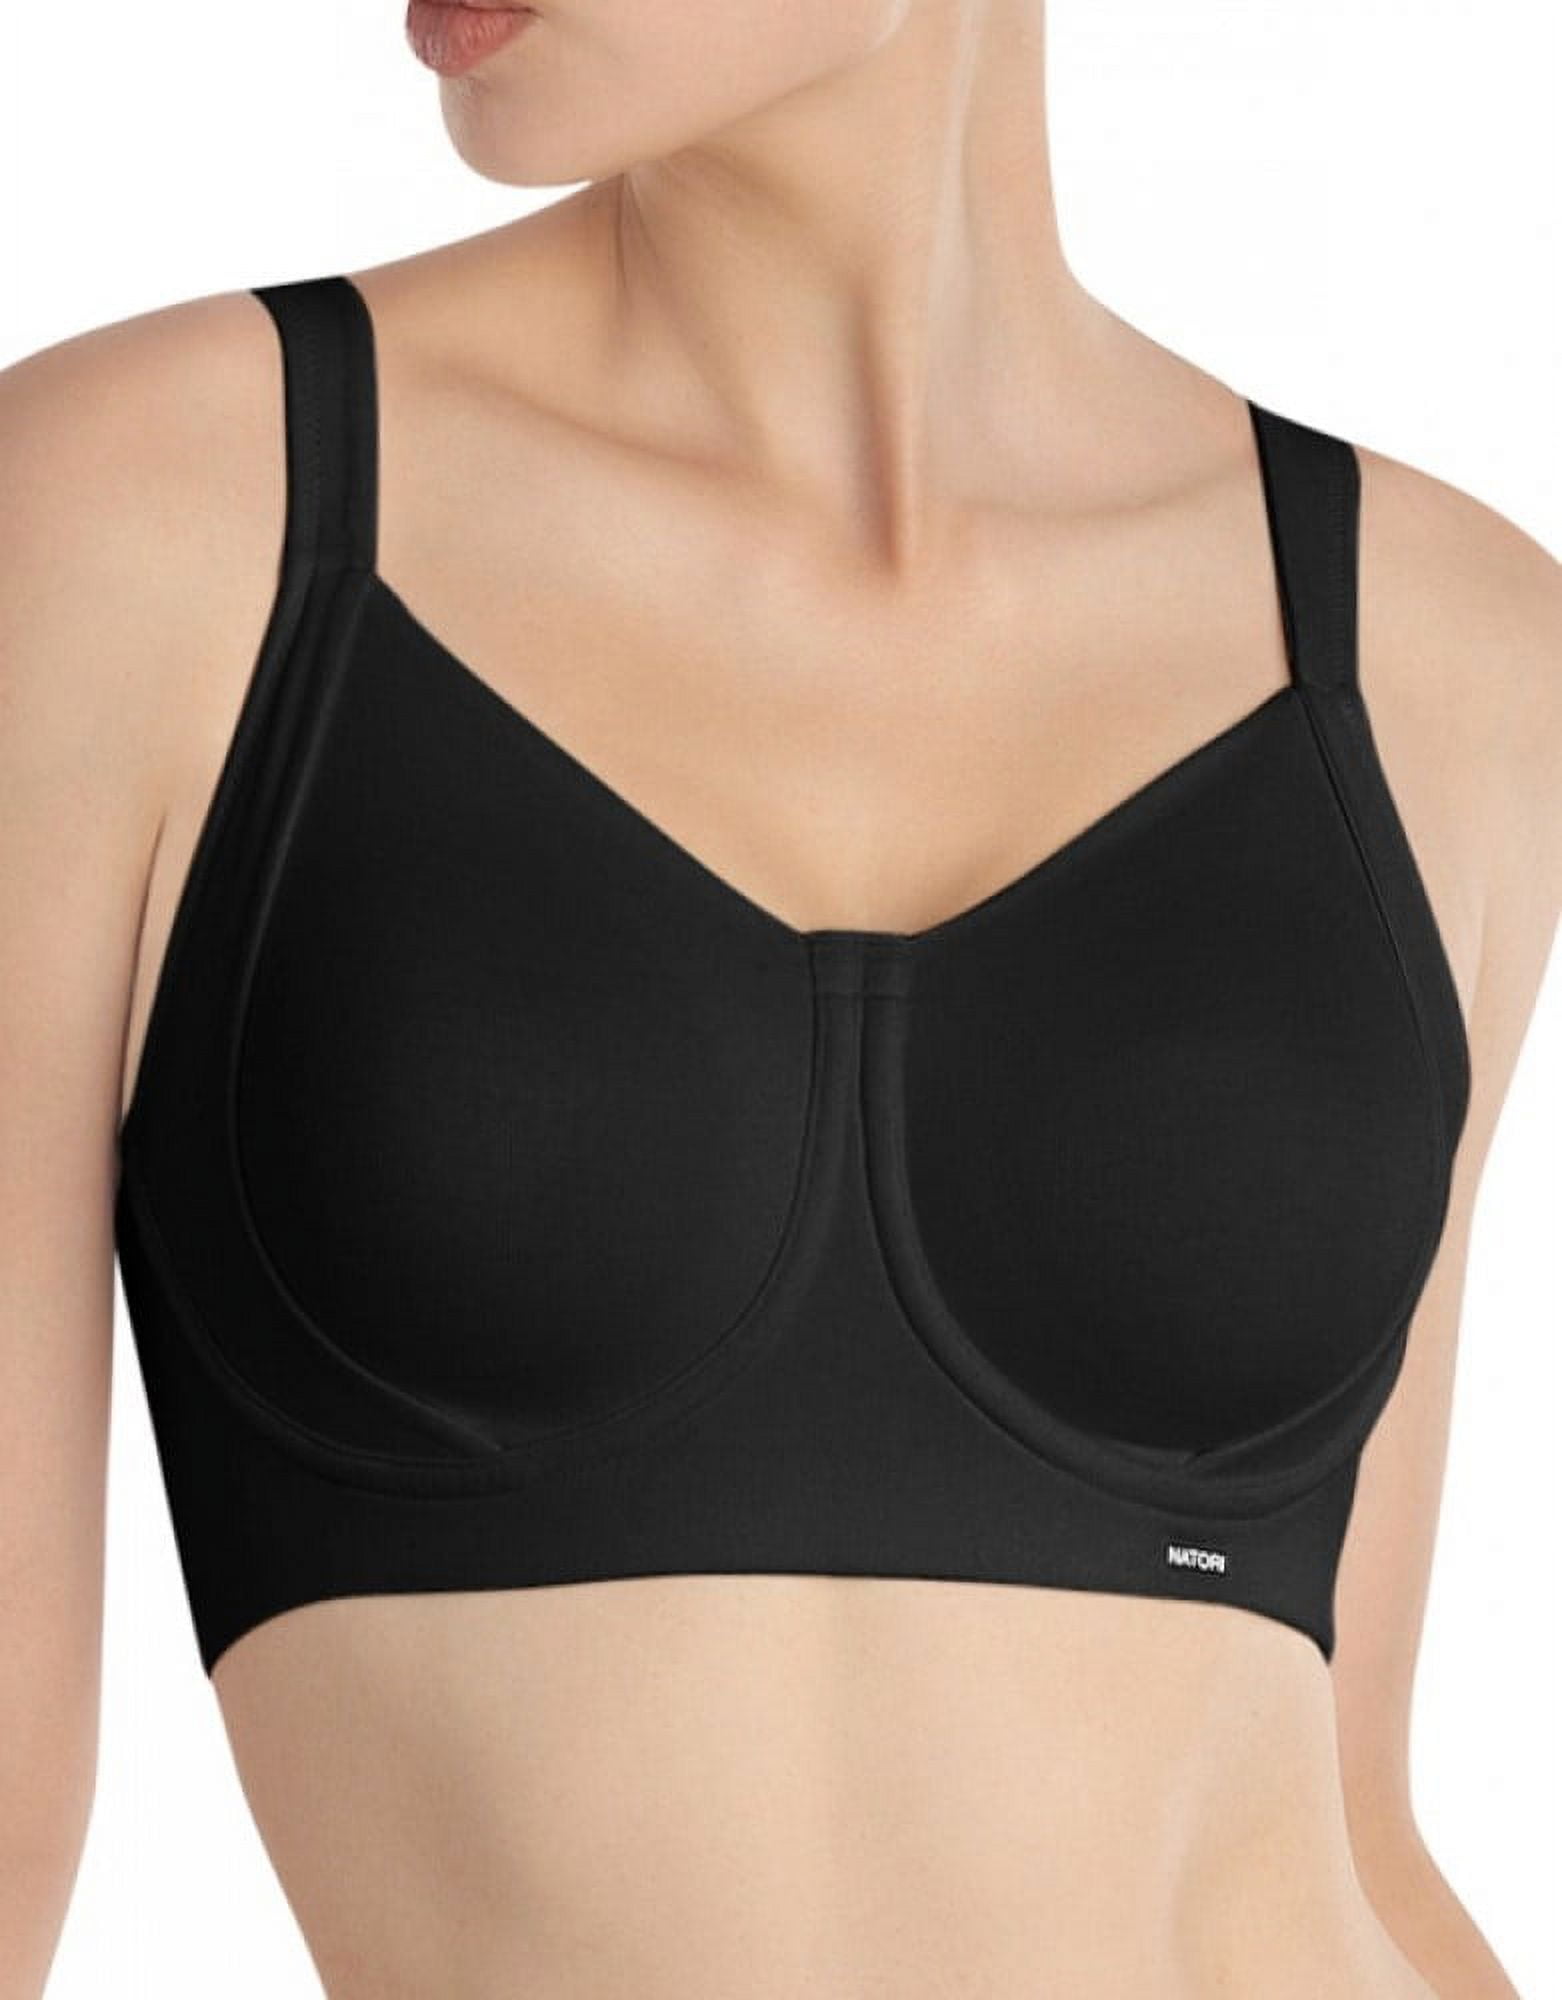 natori new black women's size 32c double-ply seamless c-cup sport bras $58  deal 